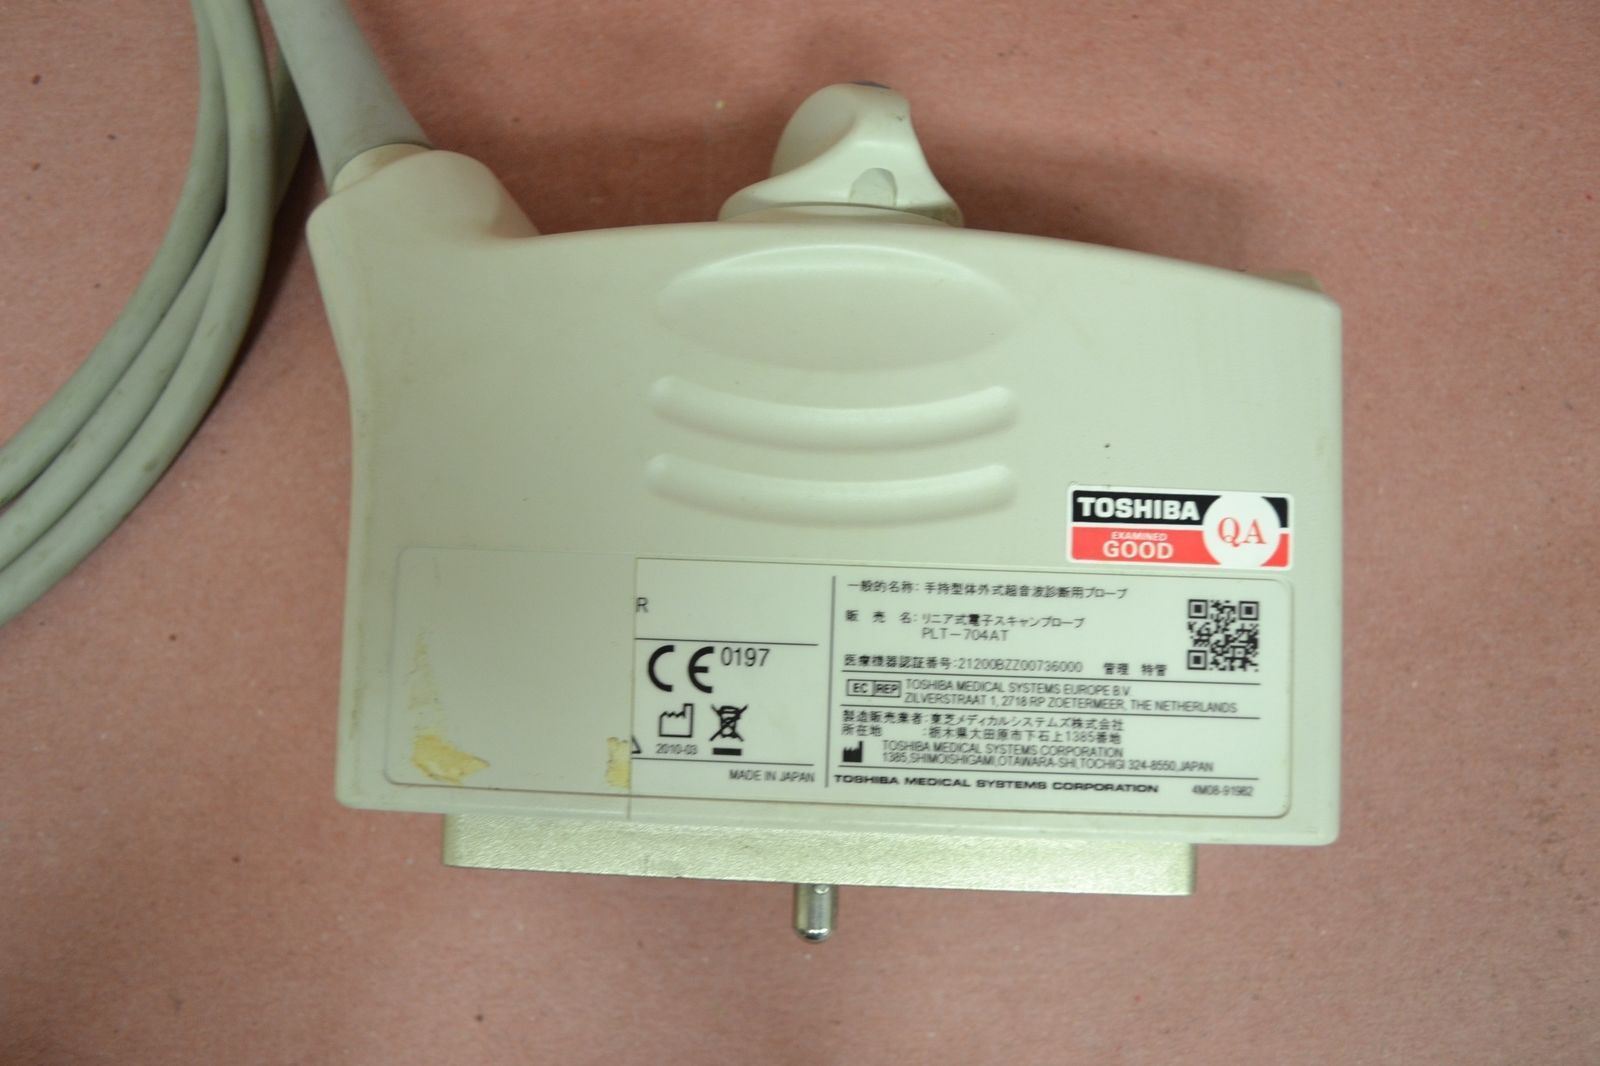 Toshiba Viamo PLT-704AT 11-5MHz Linear Ultrasound Transducer Probe DIAGNOSTIC ULTRASOUND MACHINES FOR SALE